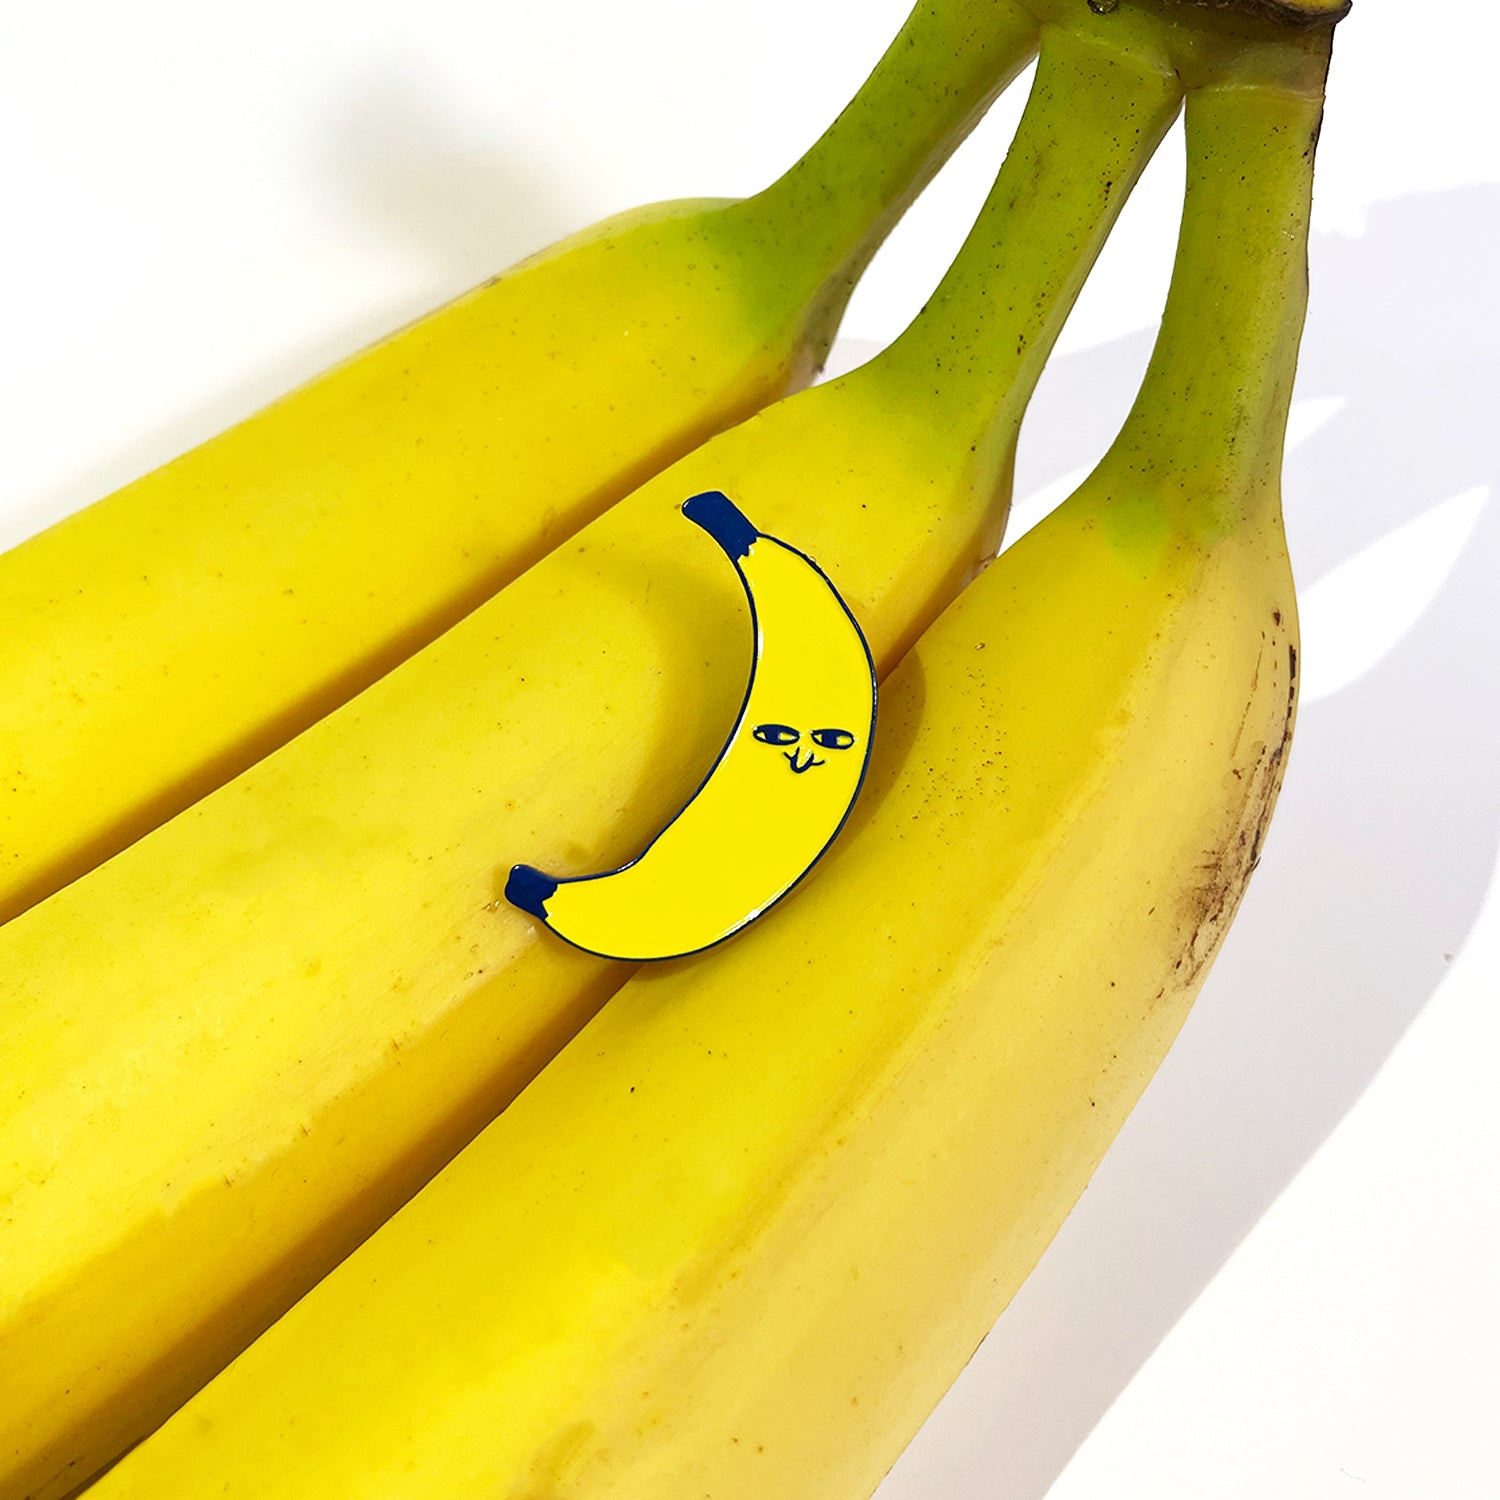 Pin on Bananas for Bags